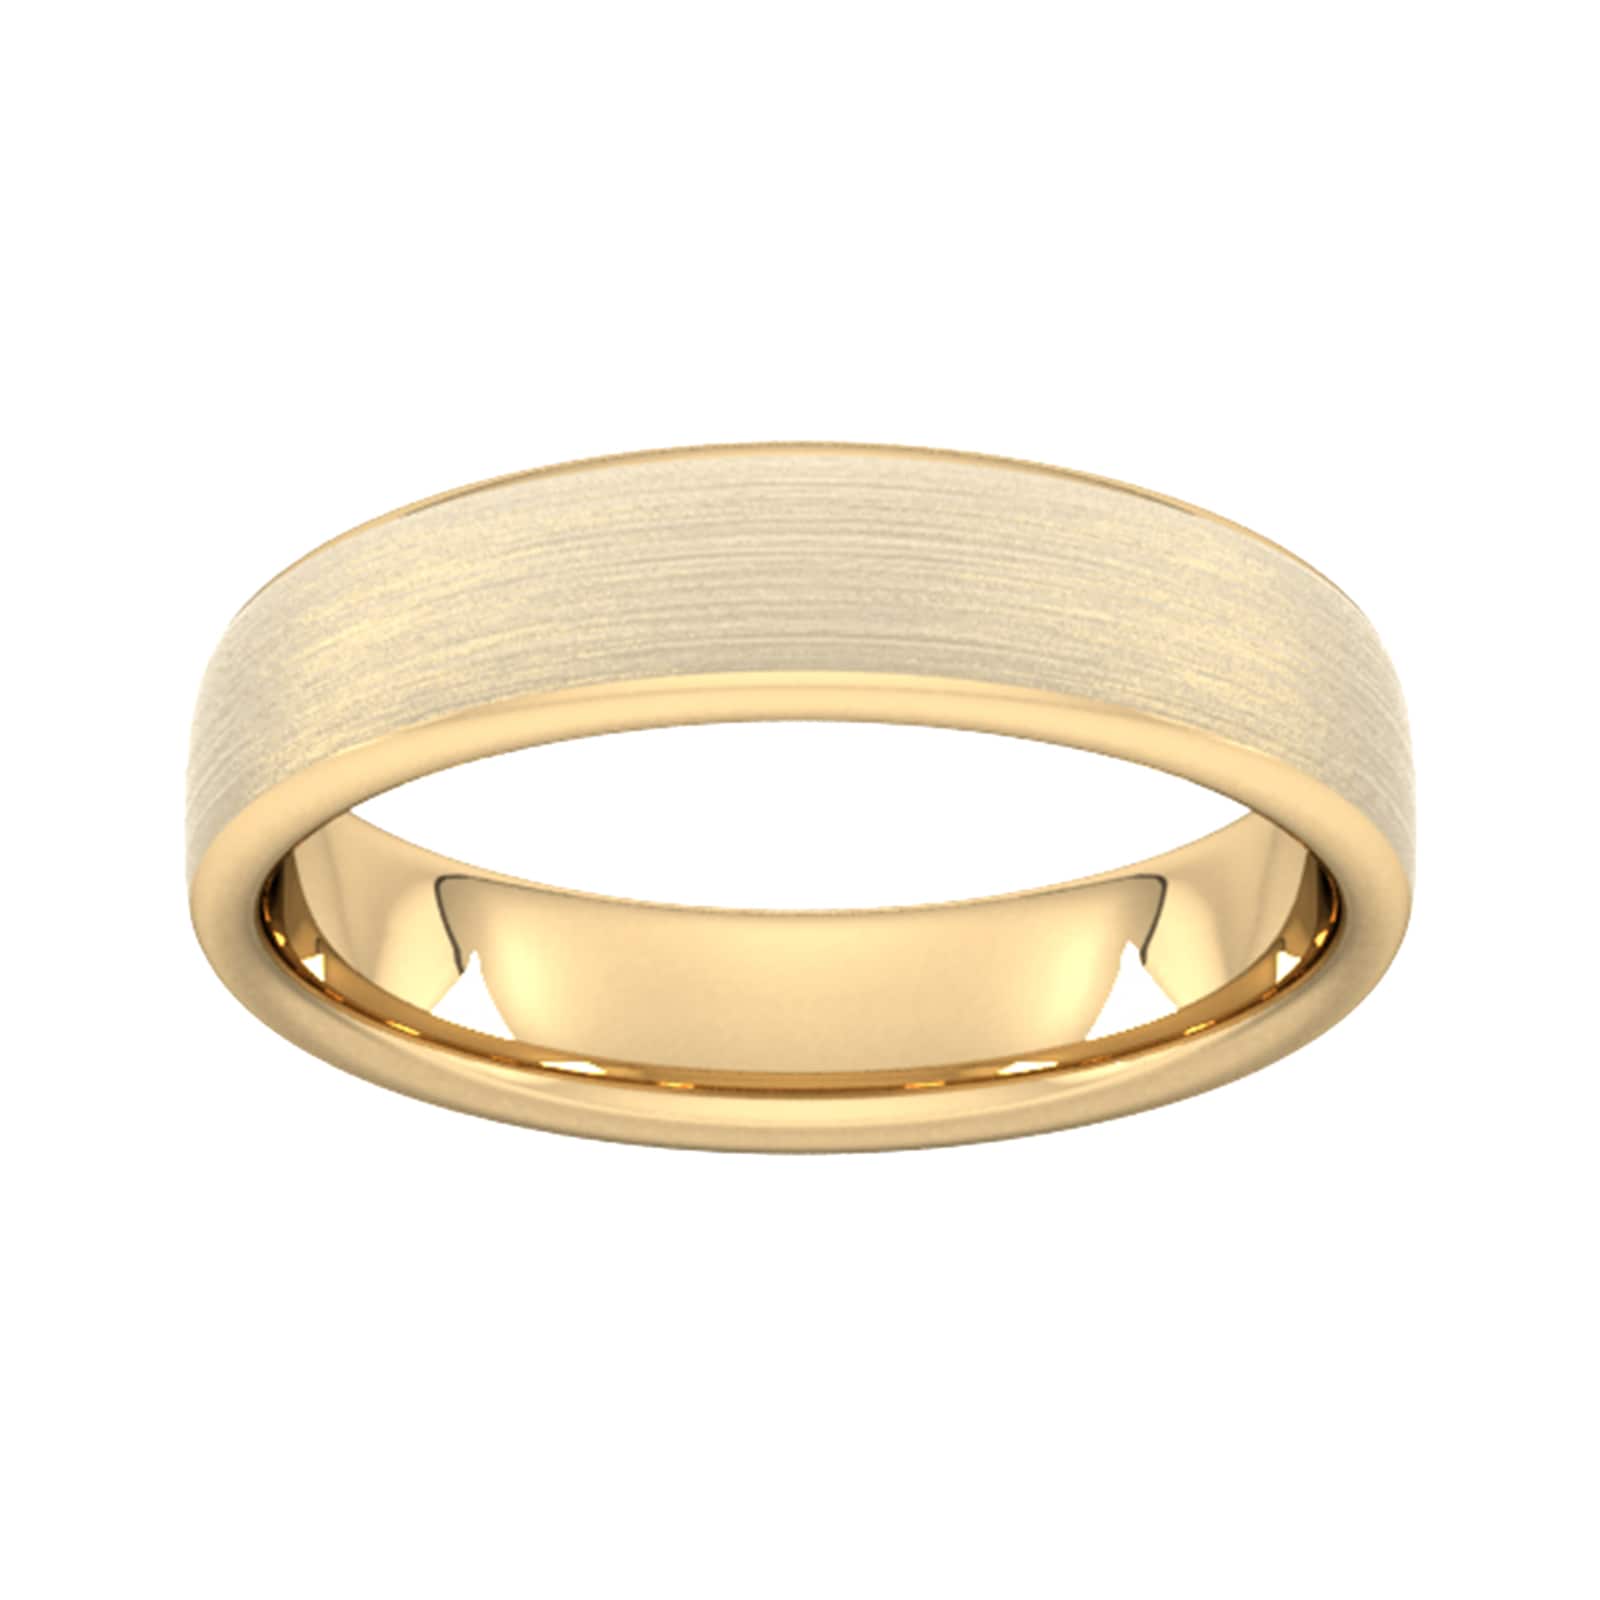 5mm D Shape Heavy Matt Finished Wedding Ring In 9 Carat Yellow Gold - Ring Size U